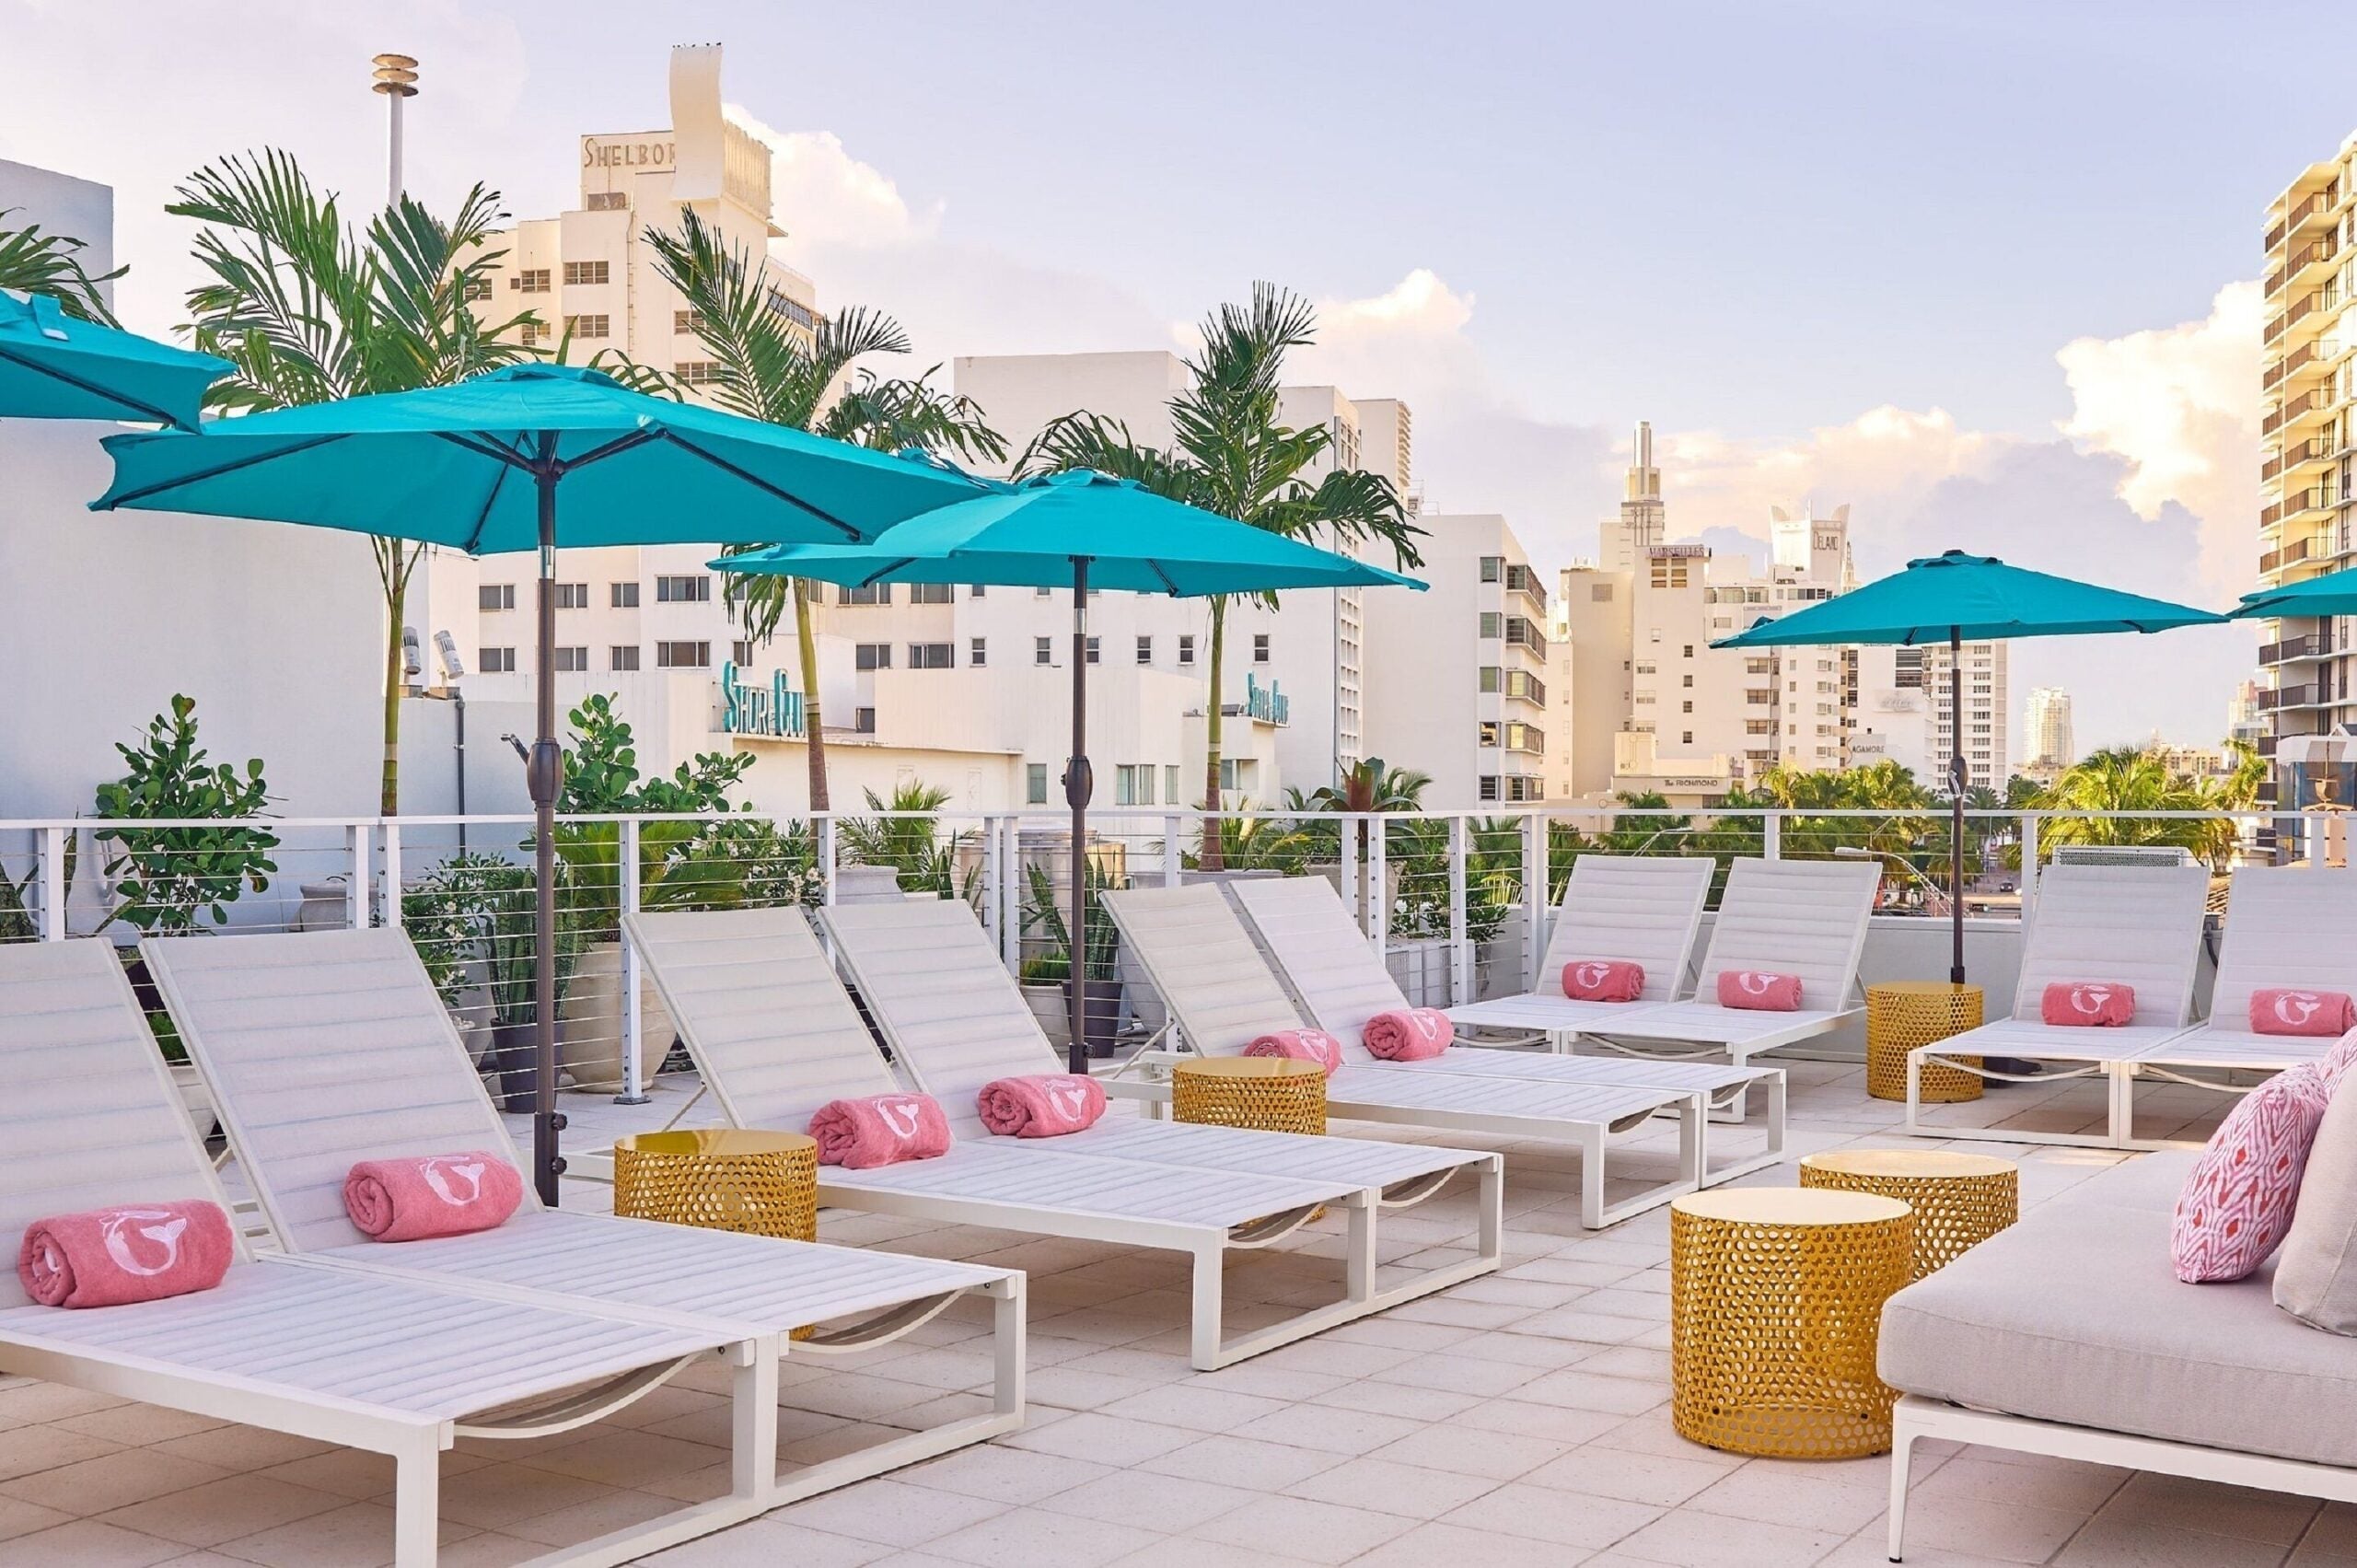 Pool deck at Hotel Greystone in Miami, Florida